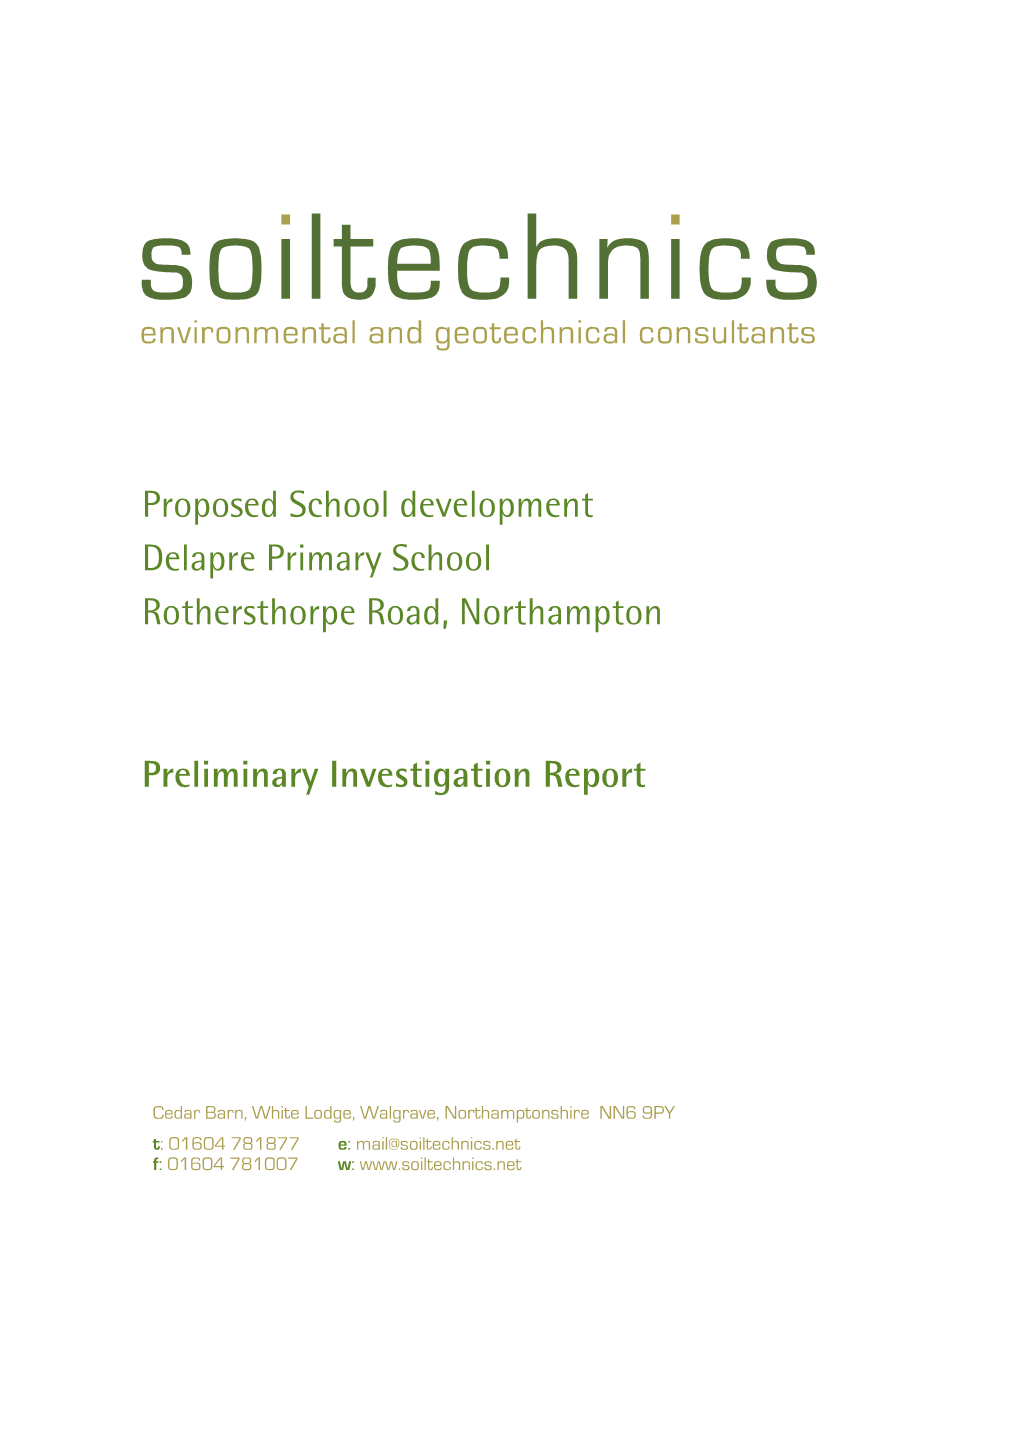 Proposed School Development Delapre Primary School Rothersthorpe Road Northamptonshire